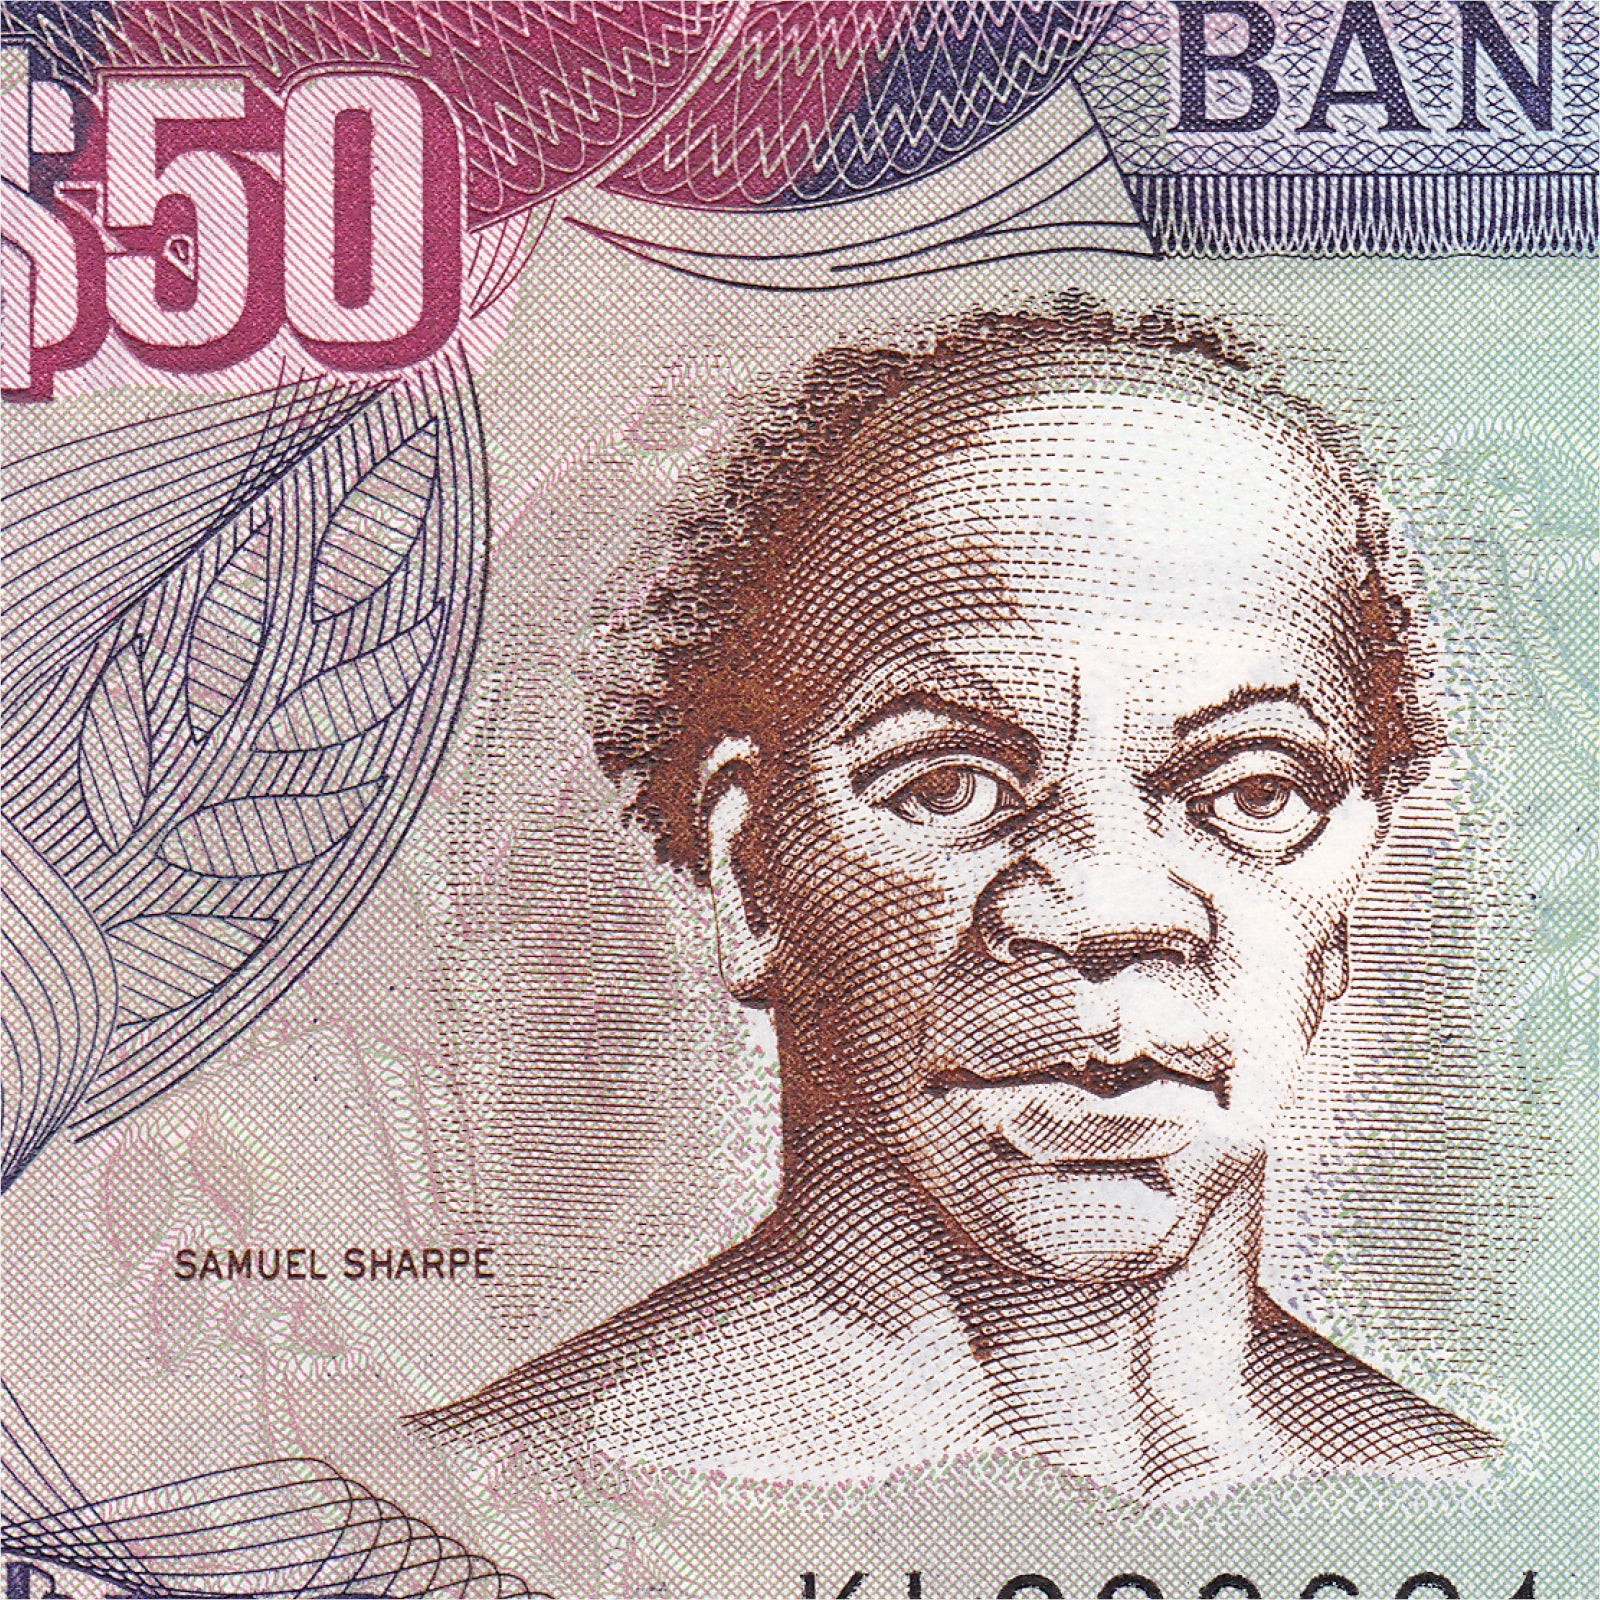 Jamaica 50 Dollars, 2004, B234e, P79e, UNC - Robert's World Money - World Banknotes